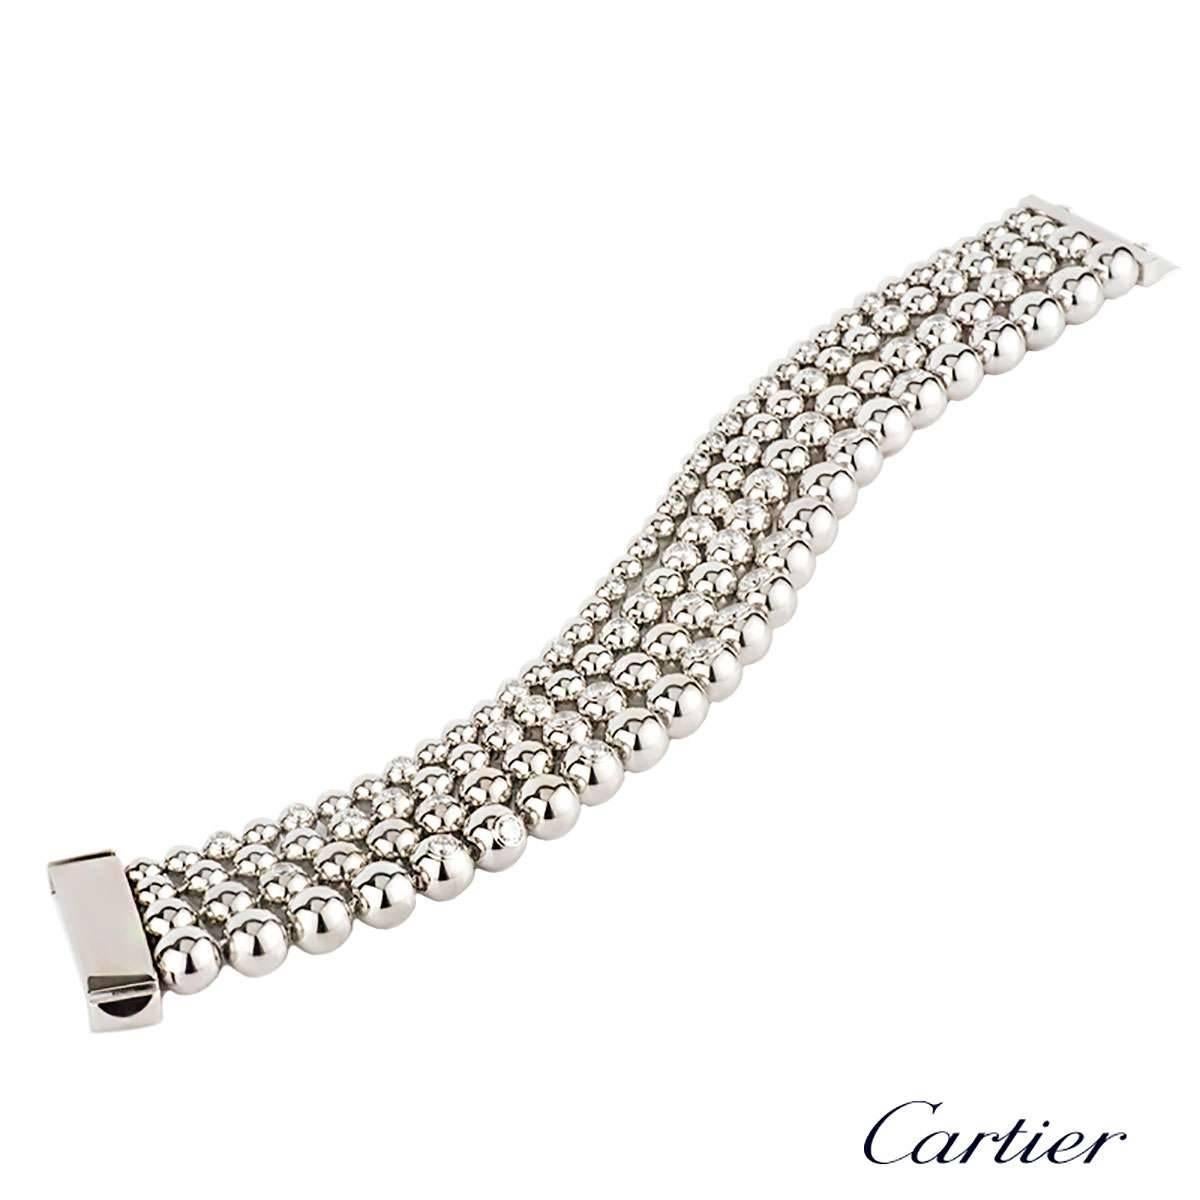 Cartier Moonlight White Gold Diamond Jewelry Suite 1